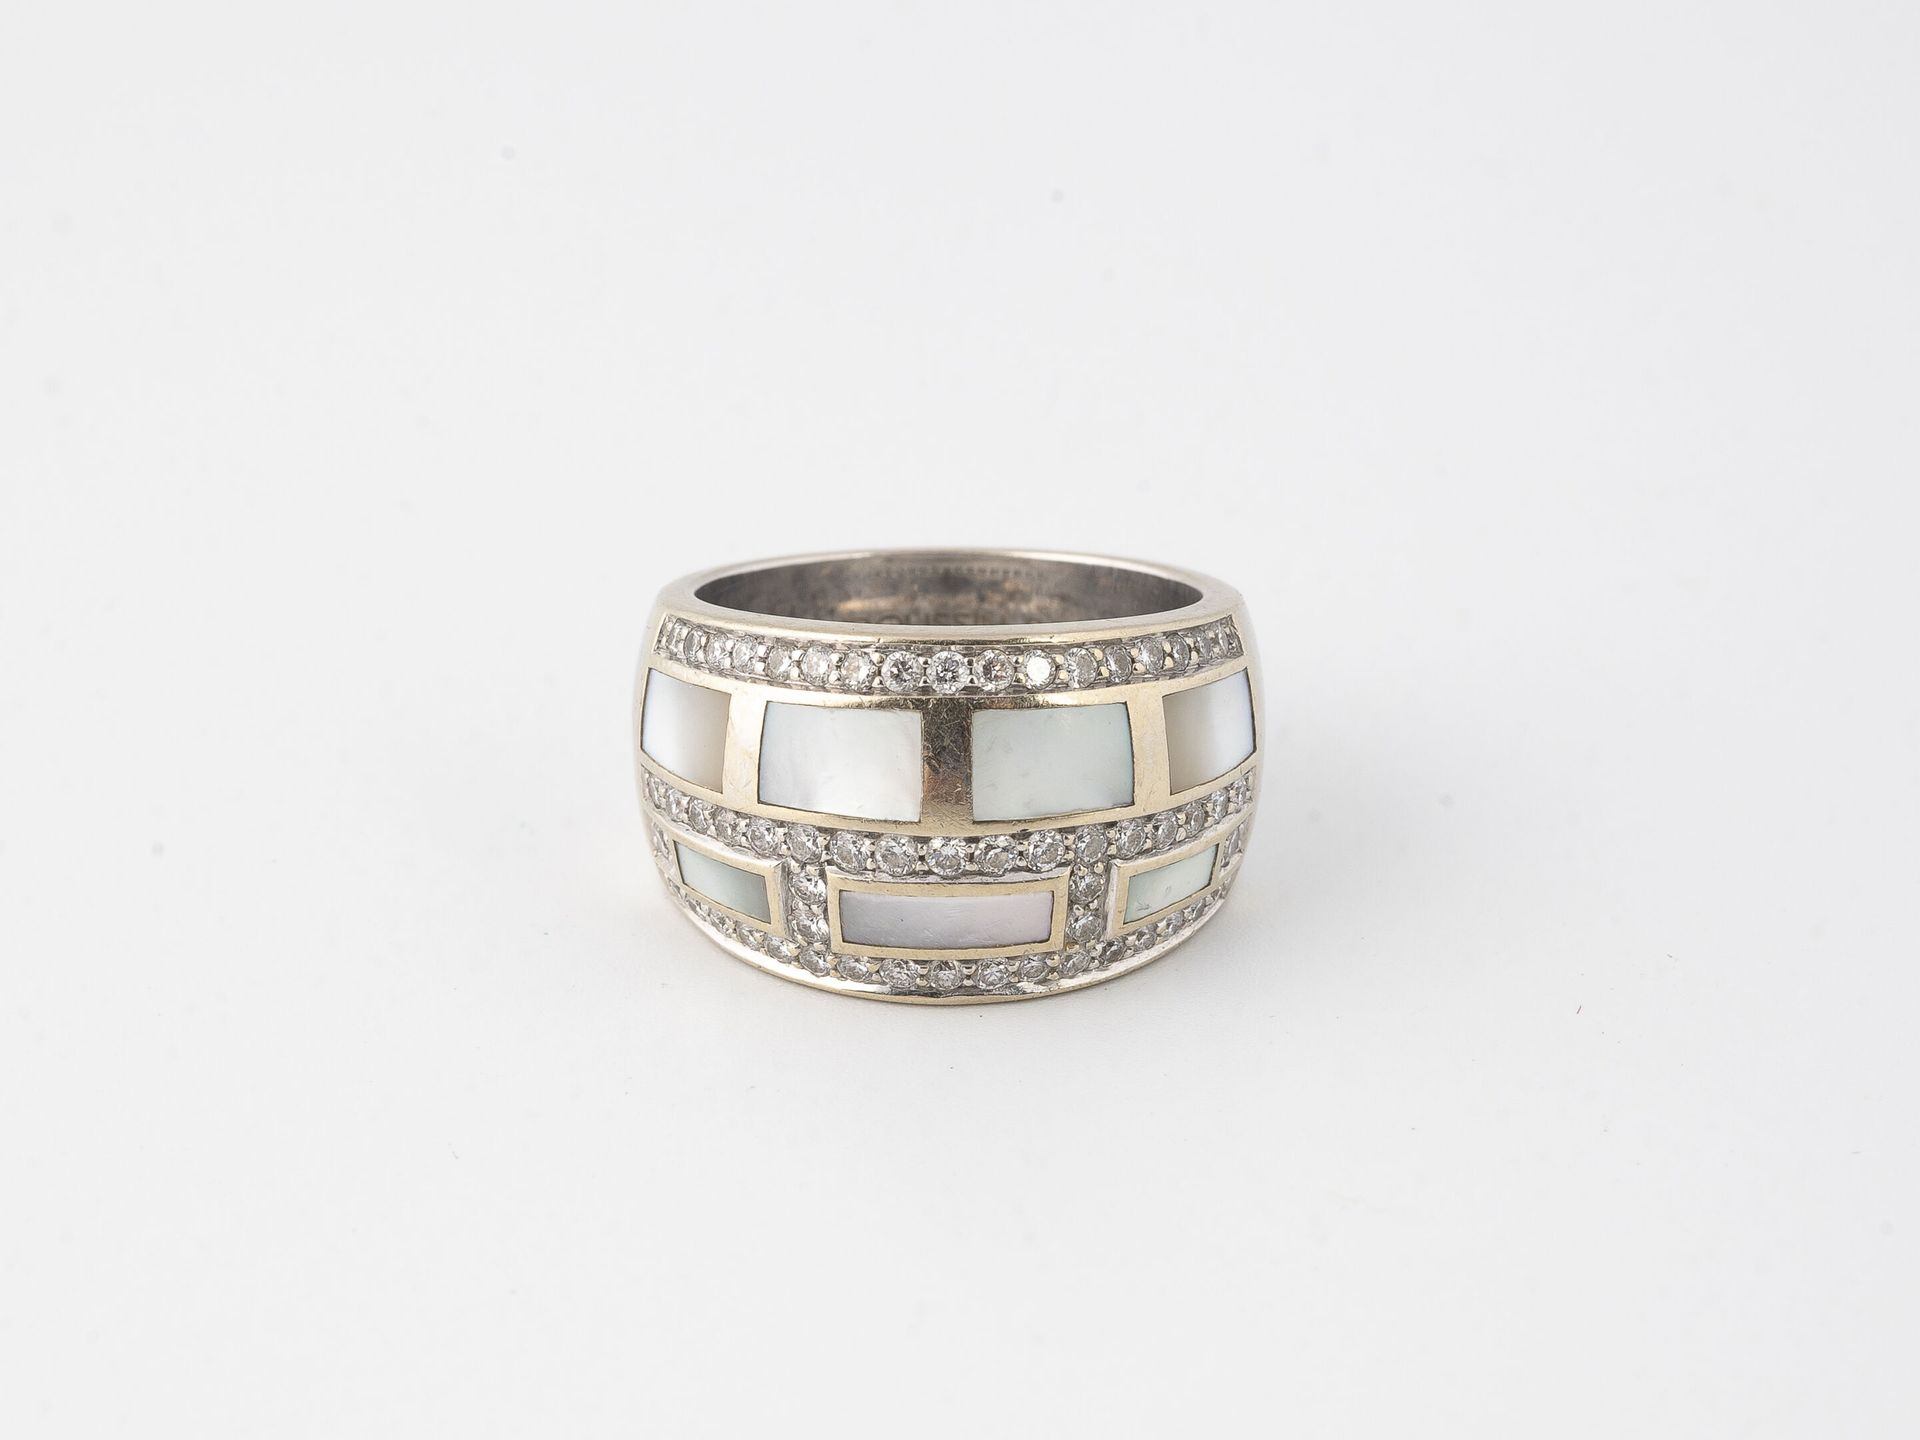 MAUBOUSSIN 白金（750）戒指，镶嵌长方形珍珠母贝和小型明亮式切割钻石。 

戒指上有签名，编号为Z 3677。

毛重：13.7克 - 手指大小：5&hellip;